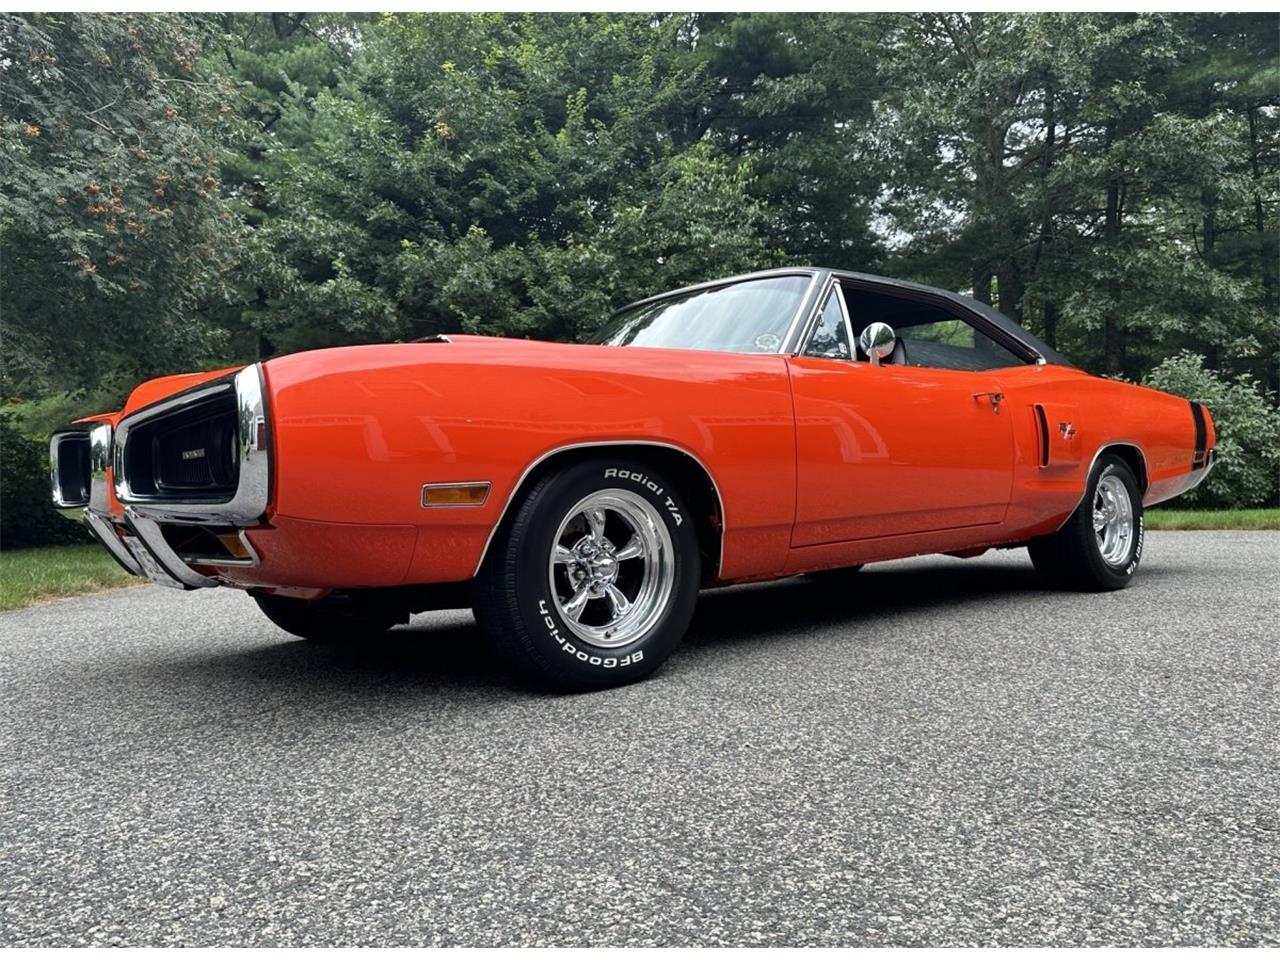 For Sale: 1970 Dodge Coronet R/T in Lake Hiawatha, New Jersey for sale in Lake Hiawatha, NJ